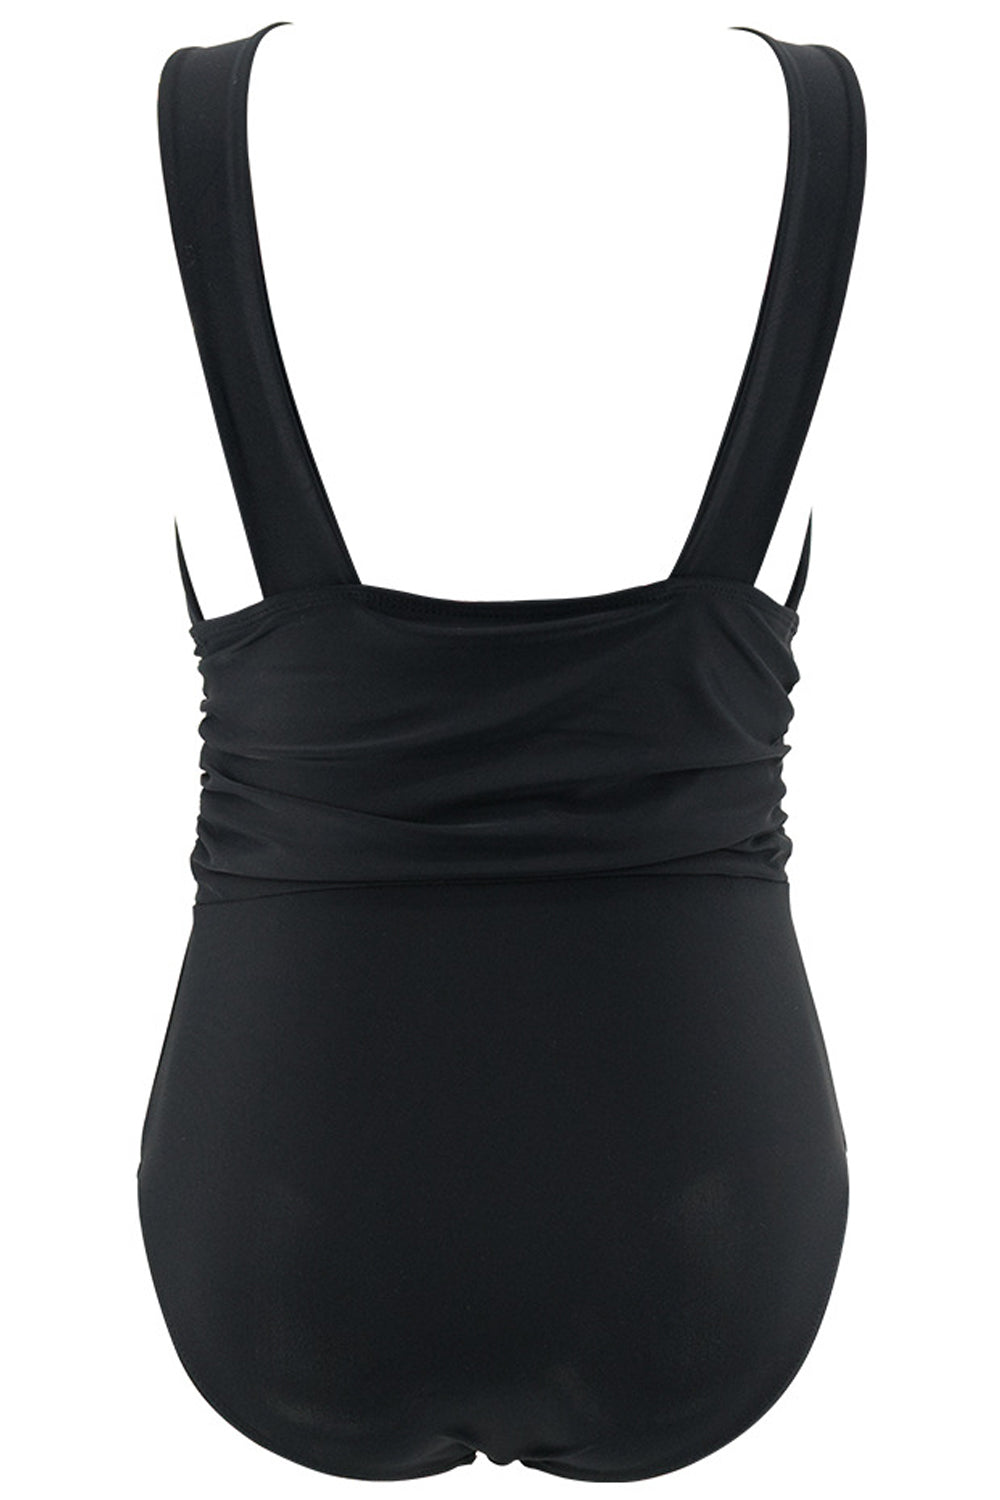 Iyasson Black Cross Design One-piece Swimsuit